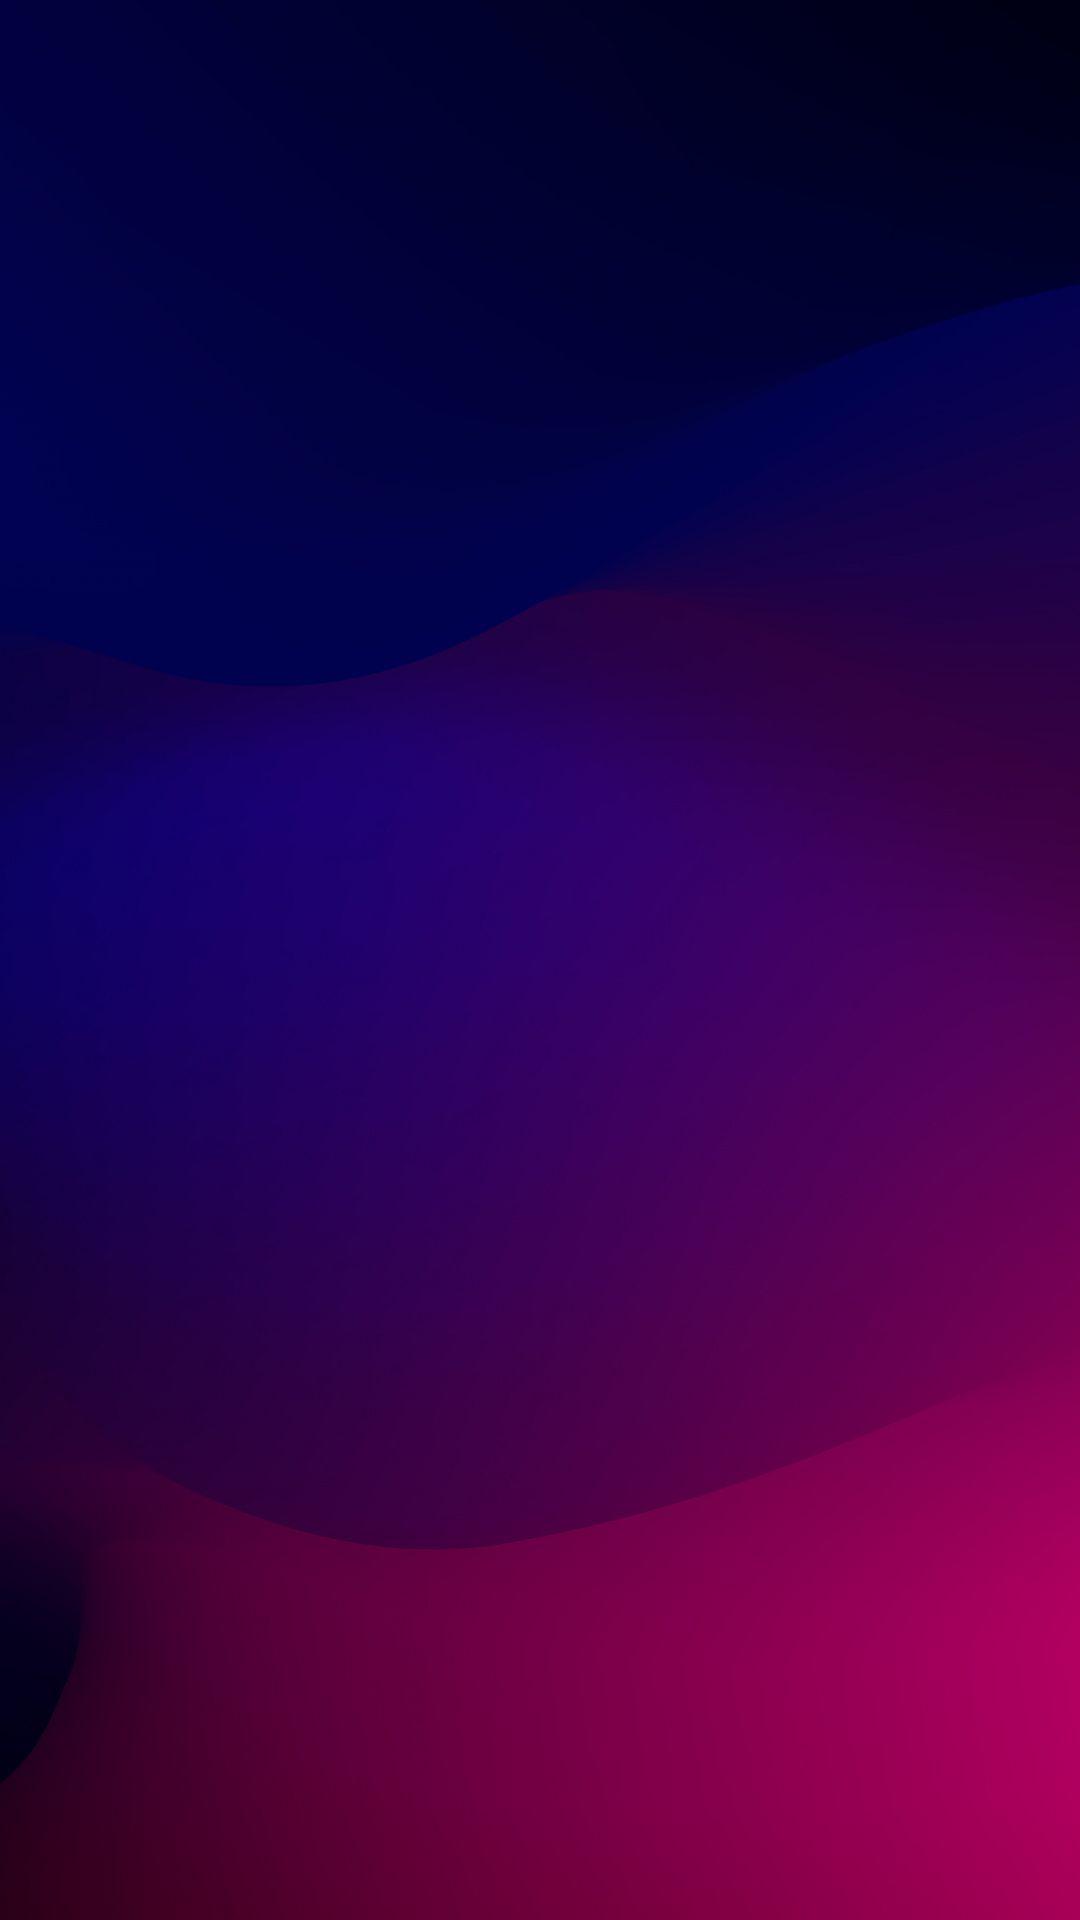 Dark, abstract, simple colors, blur, 1080x1920 wallpaper. Black and purple wallpaper, Purple wallpaper, Android wallpaper